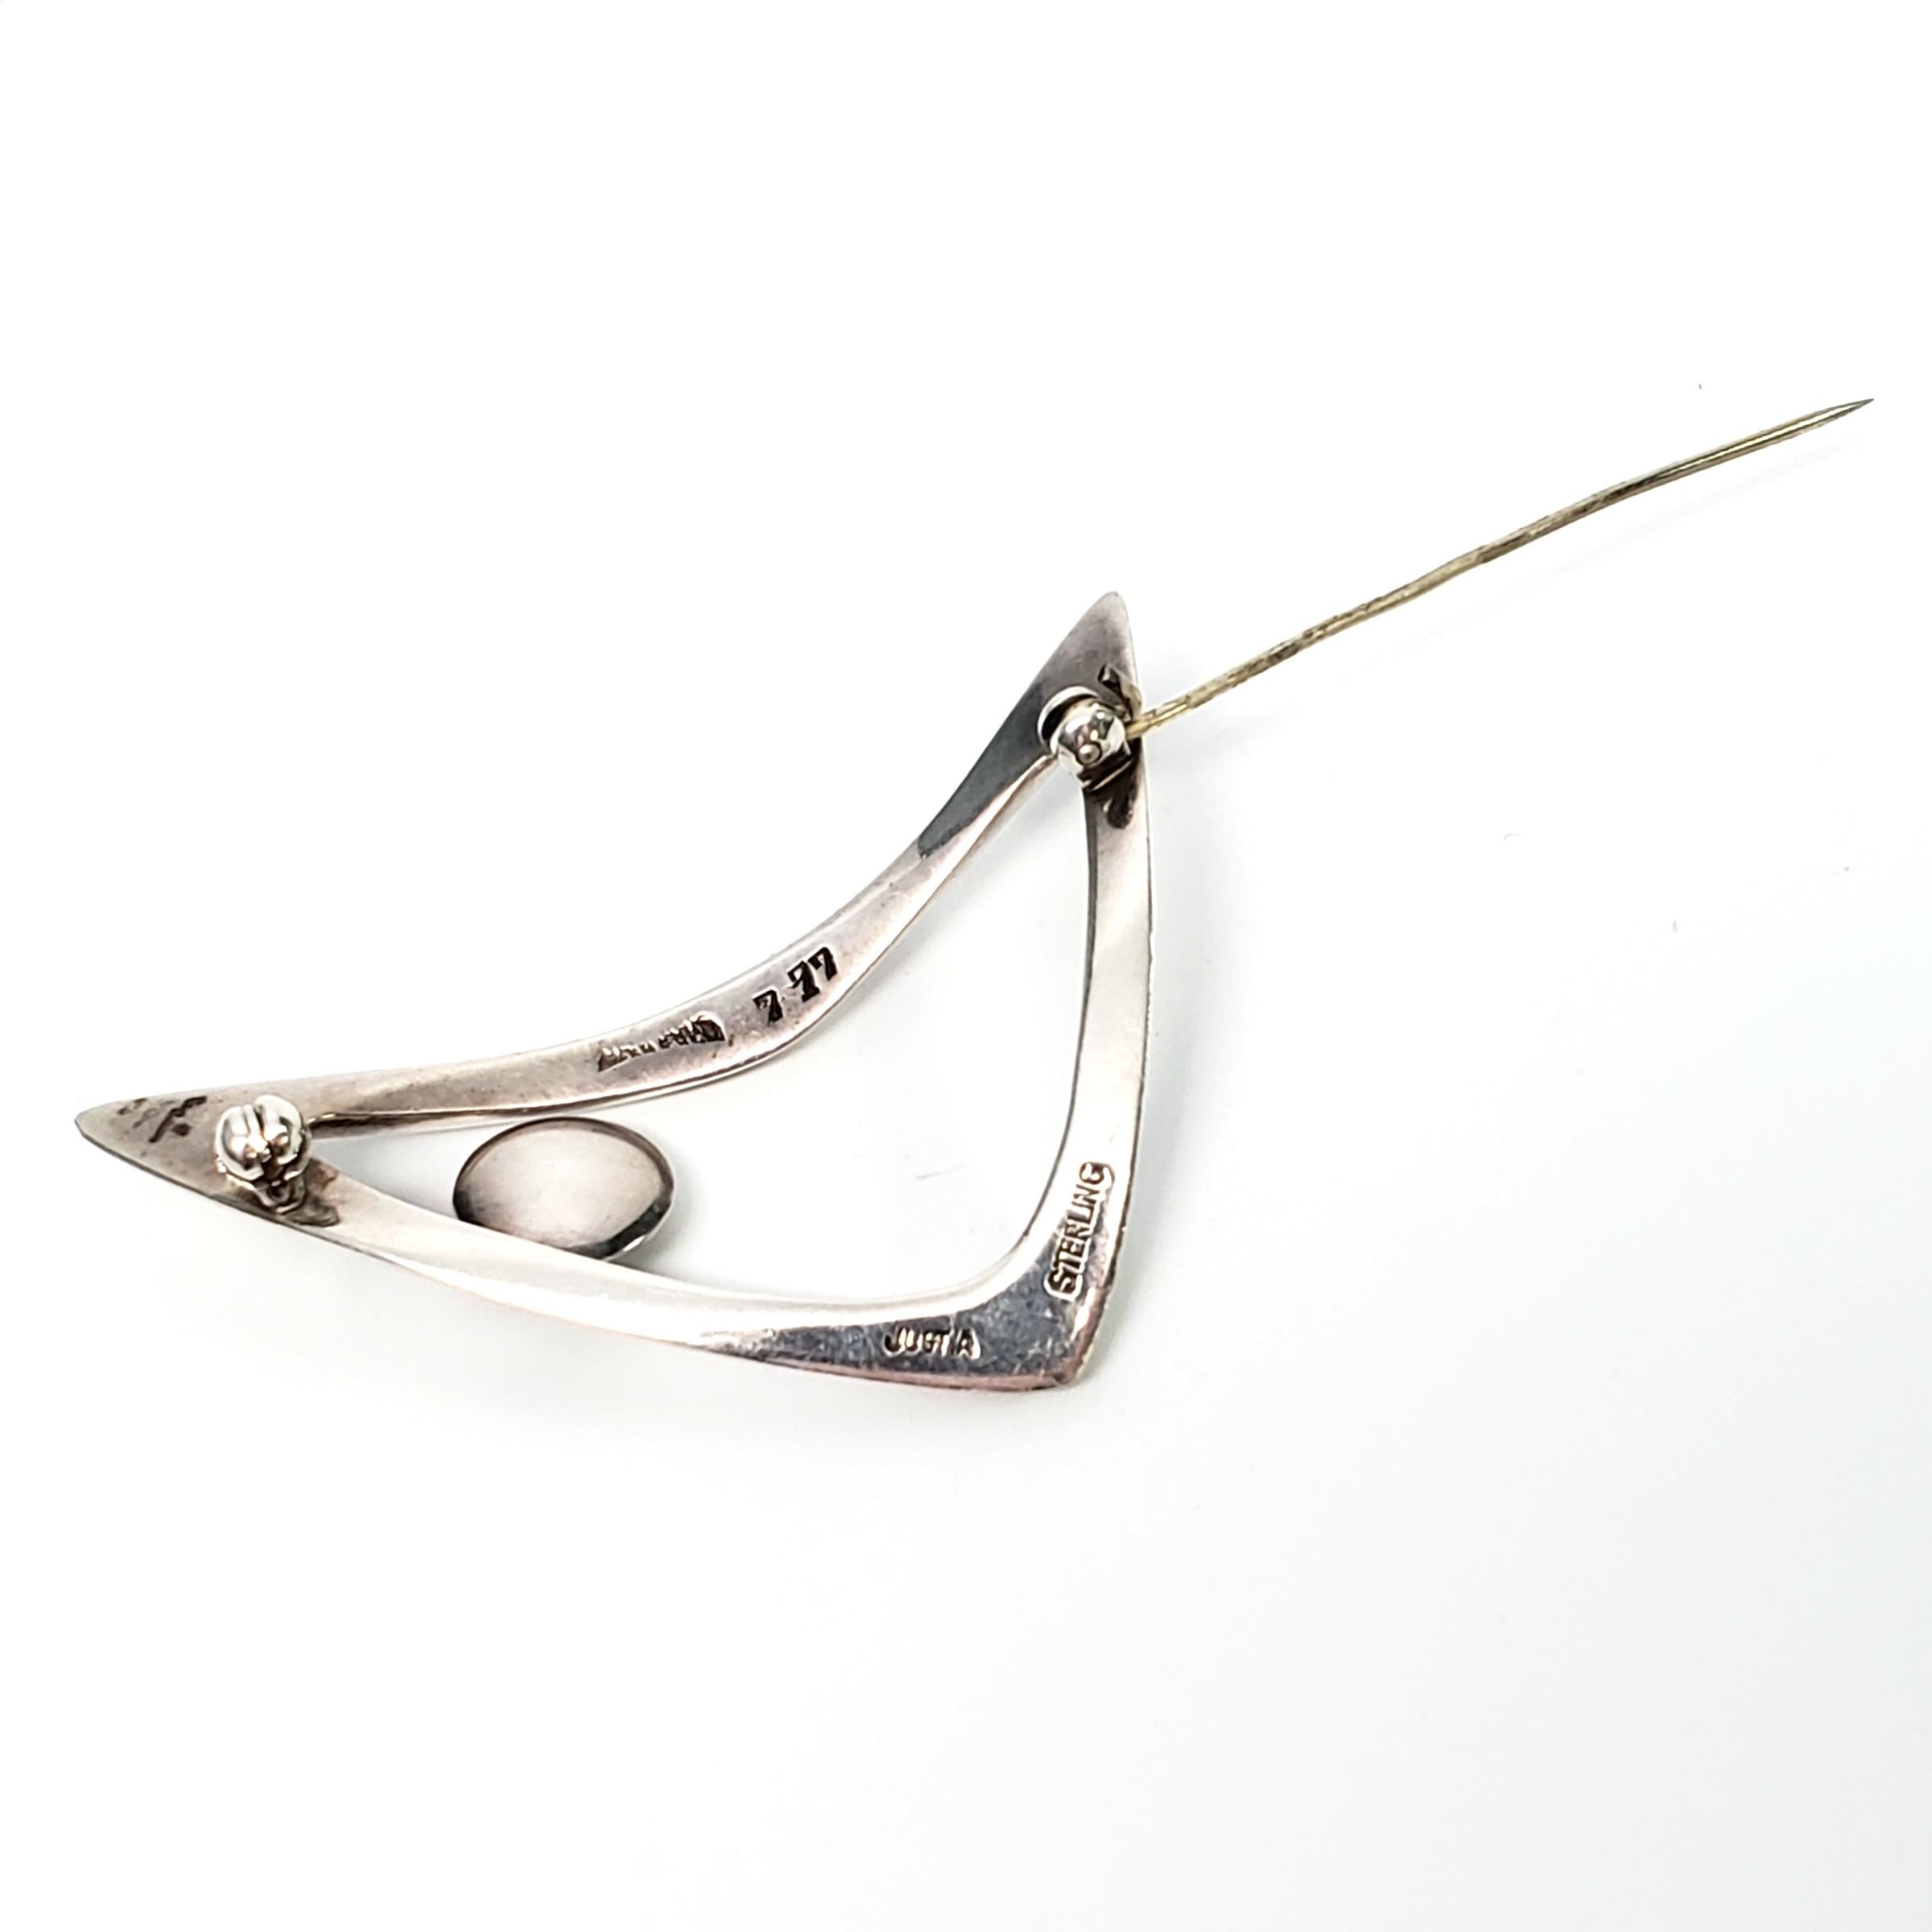 Women's Just Andersen Denmark Sterling Silver Modernist Boomerang Pin #777 For Sale